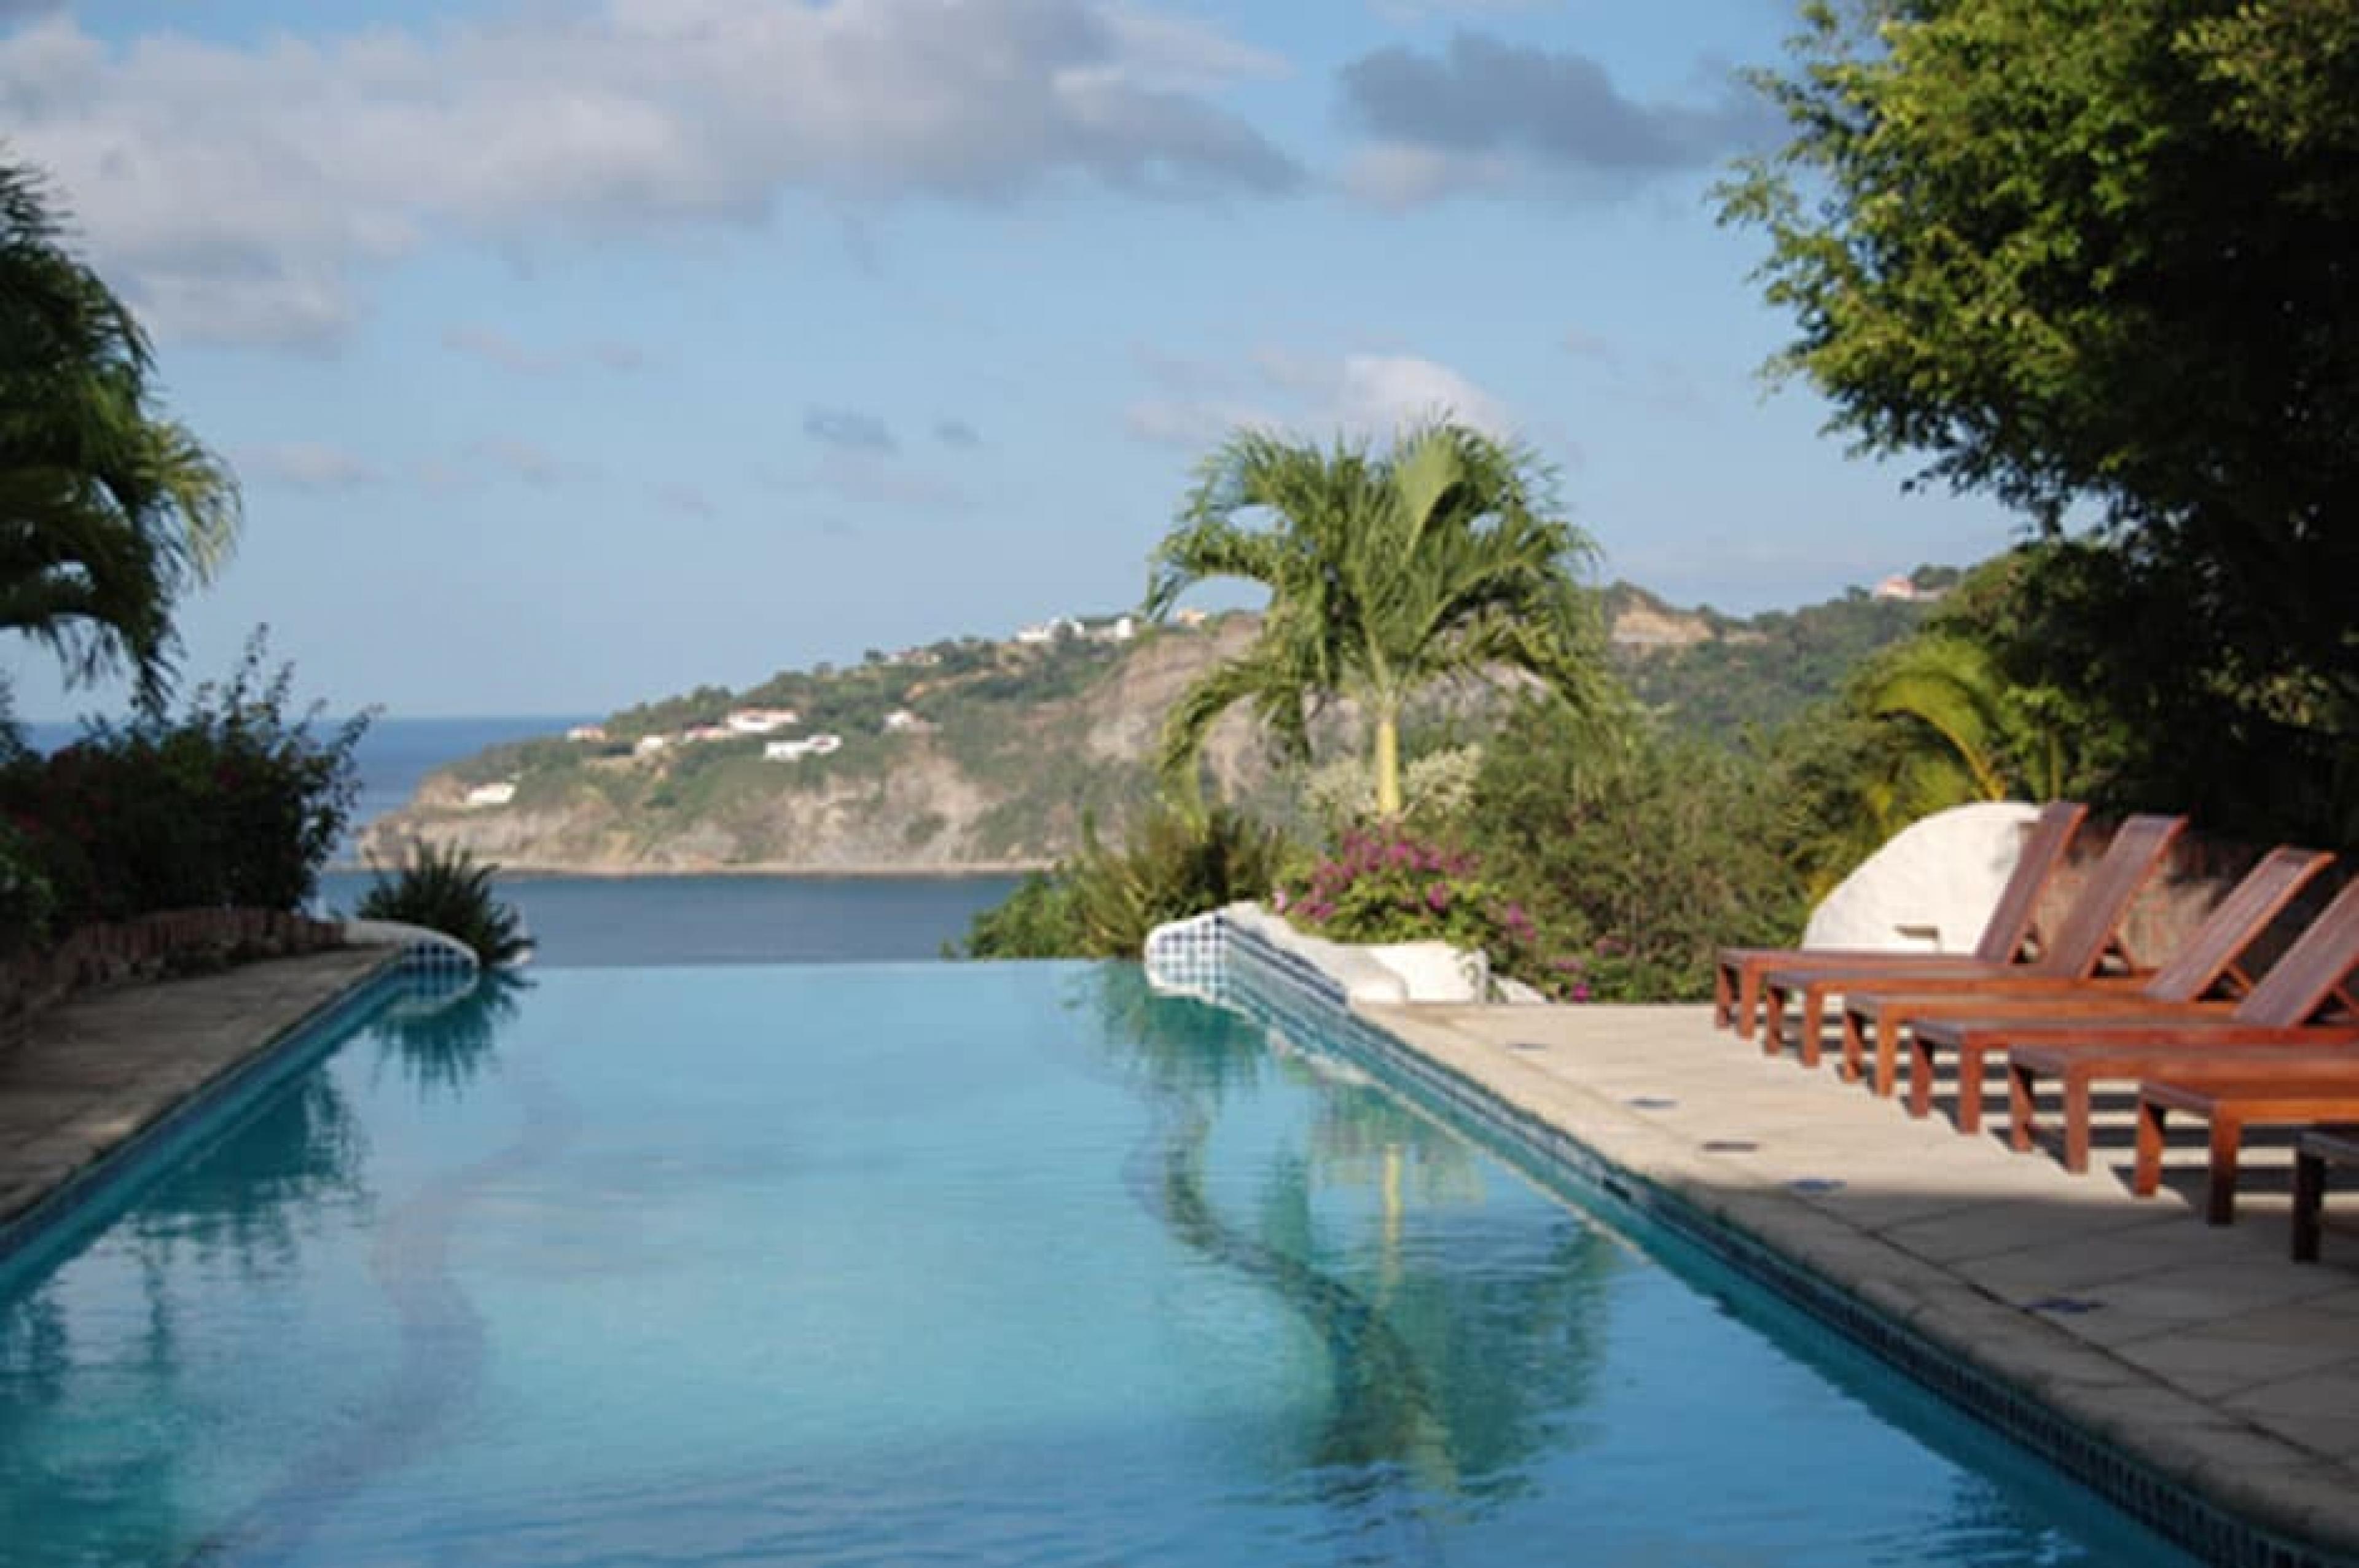 Pool Lounge  at Pelican Eyes Resort & Spa, Nicaragua